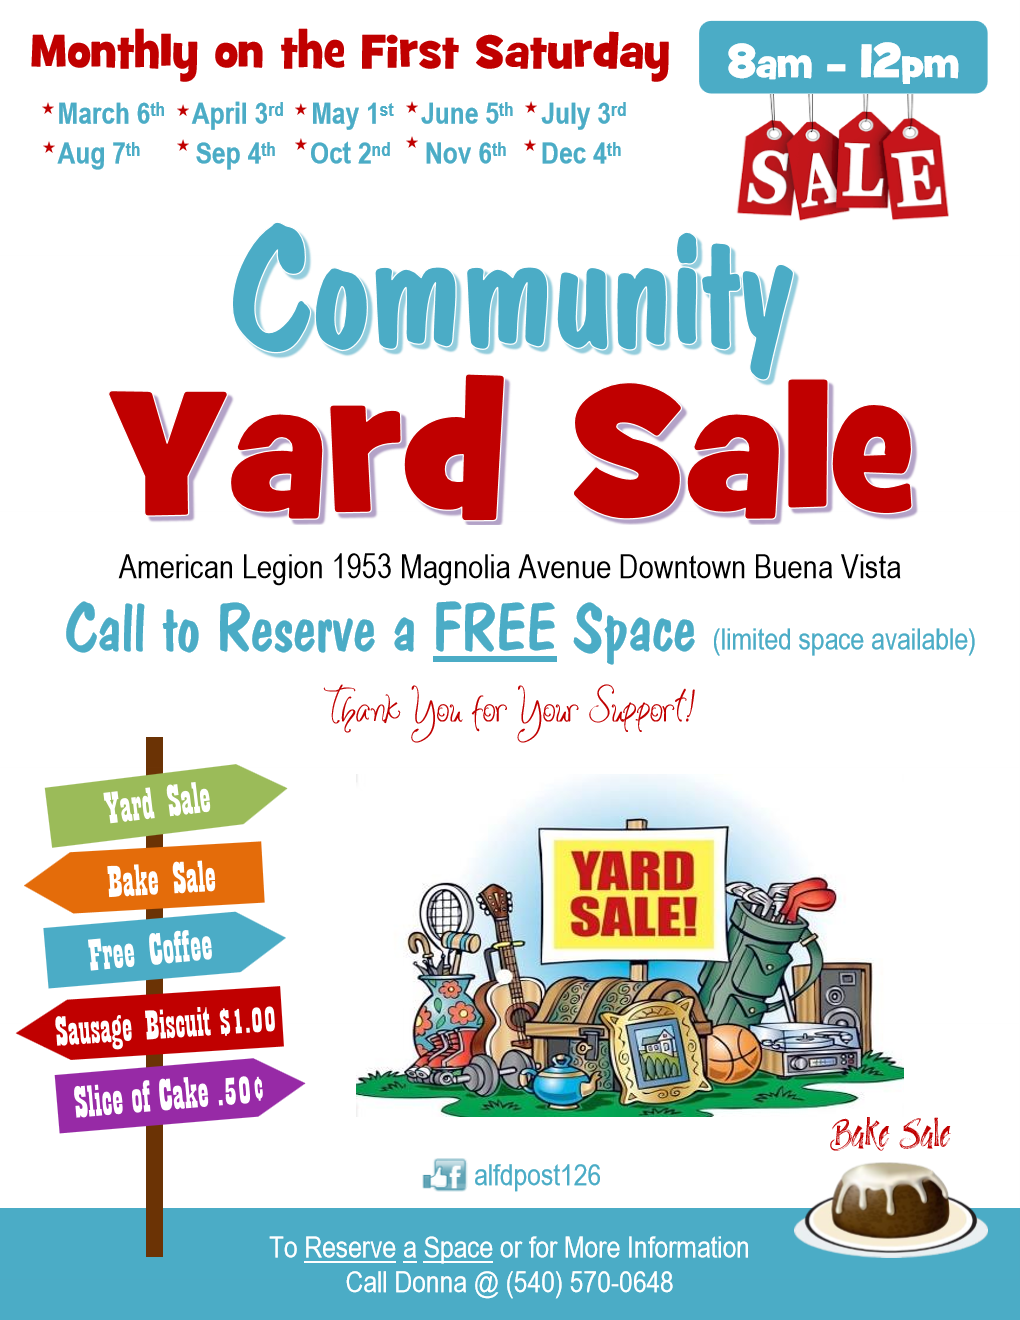 American Legion Community Yard Sale City of Buena Vista, VA